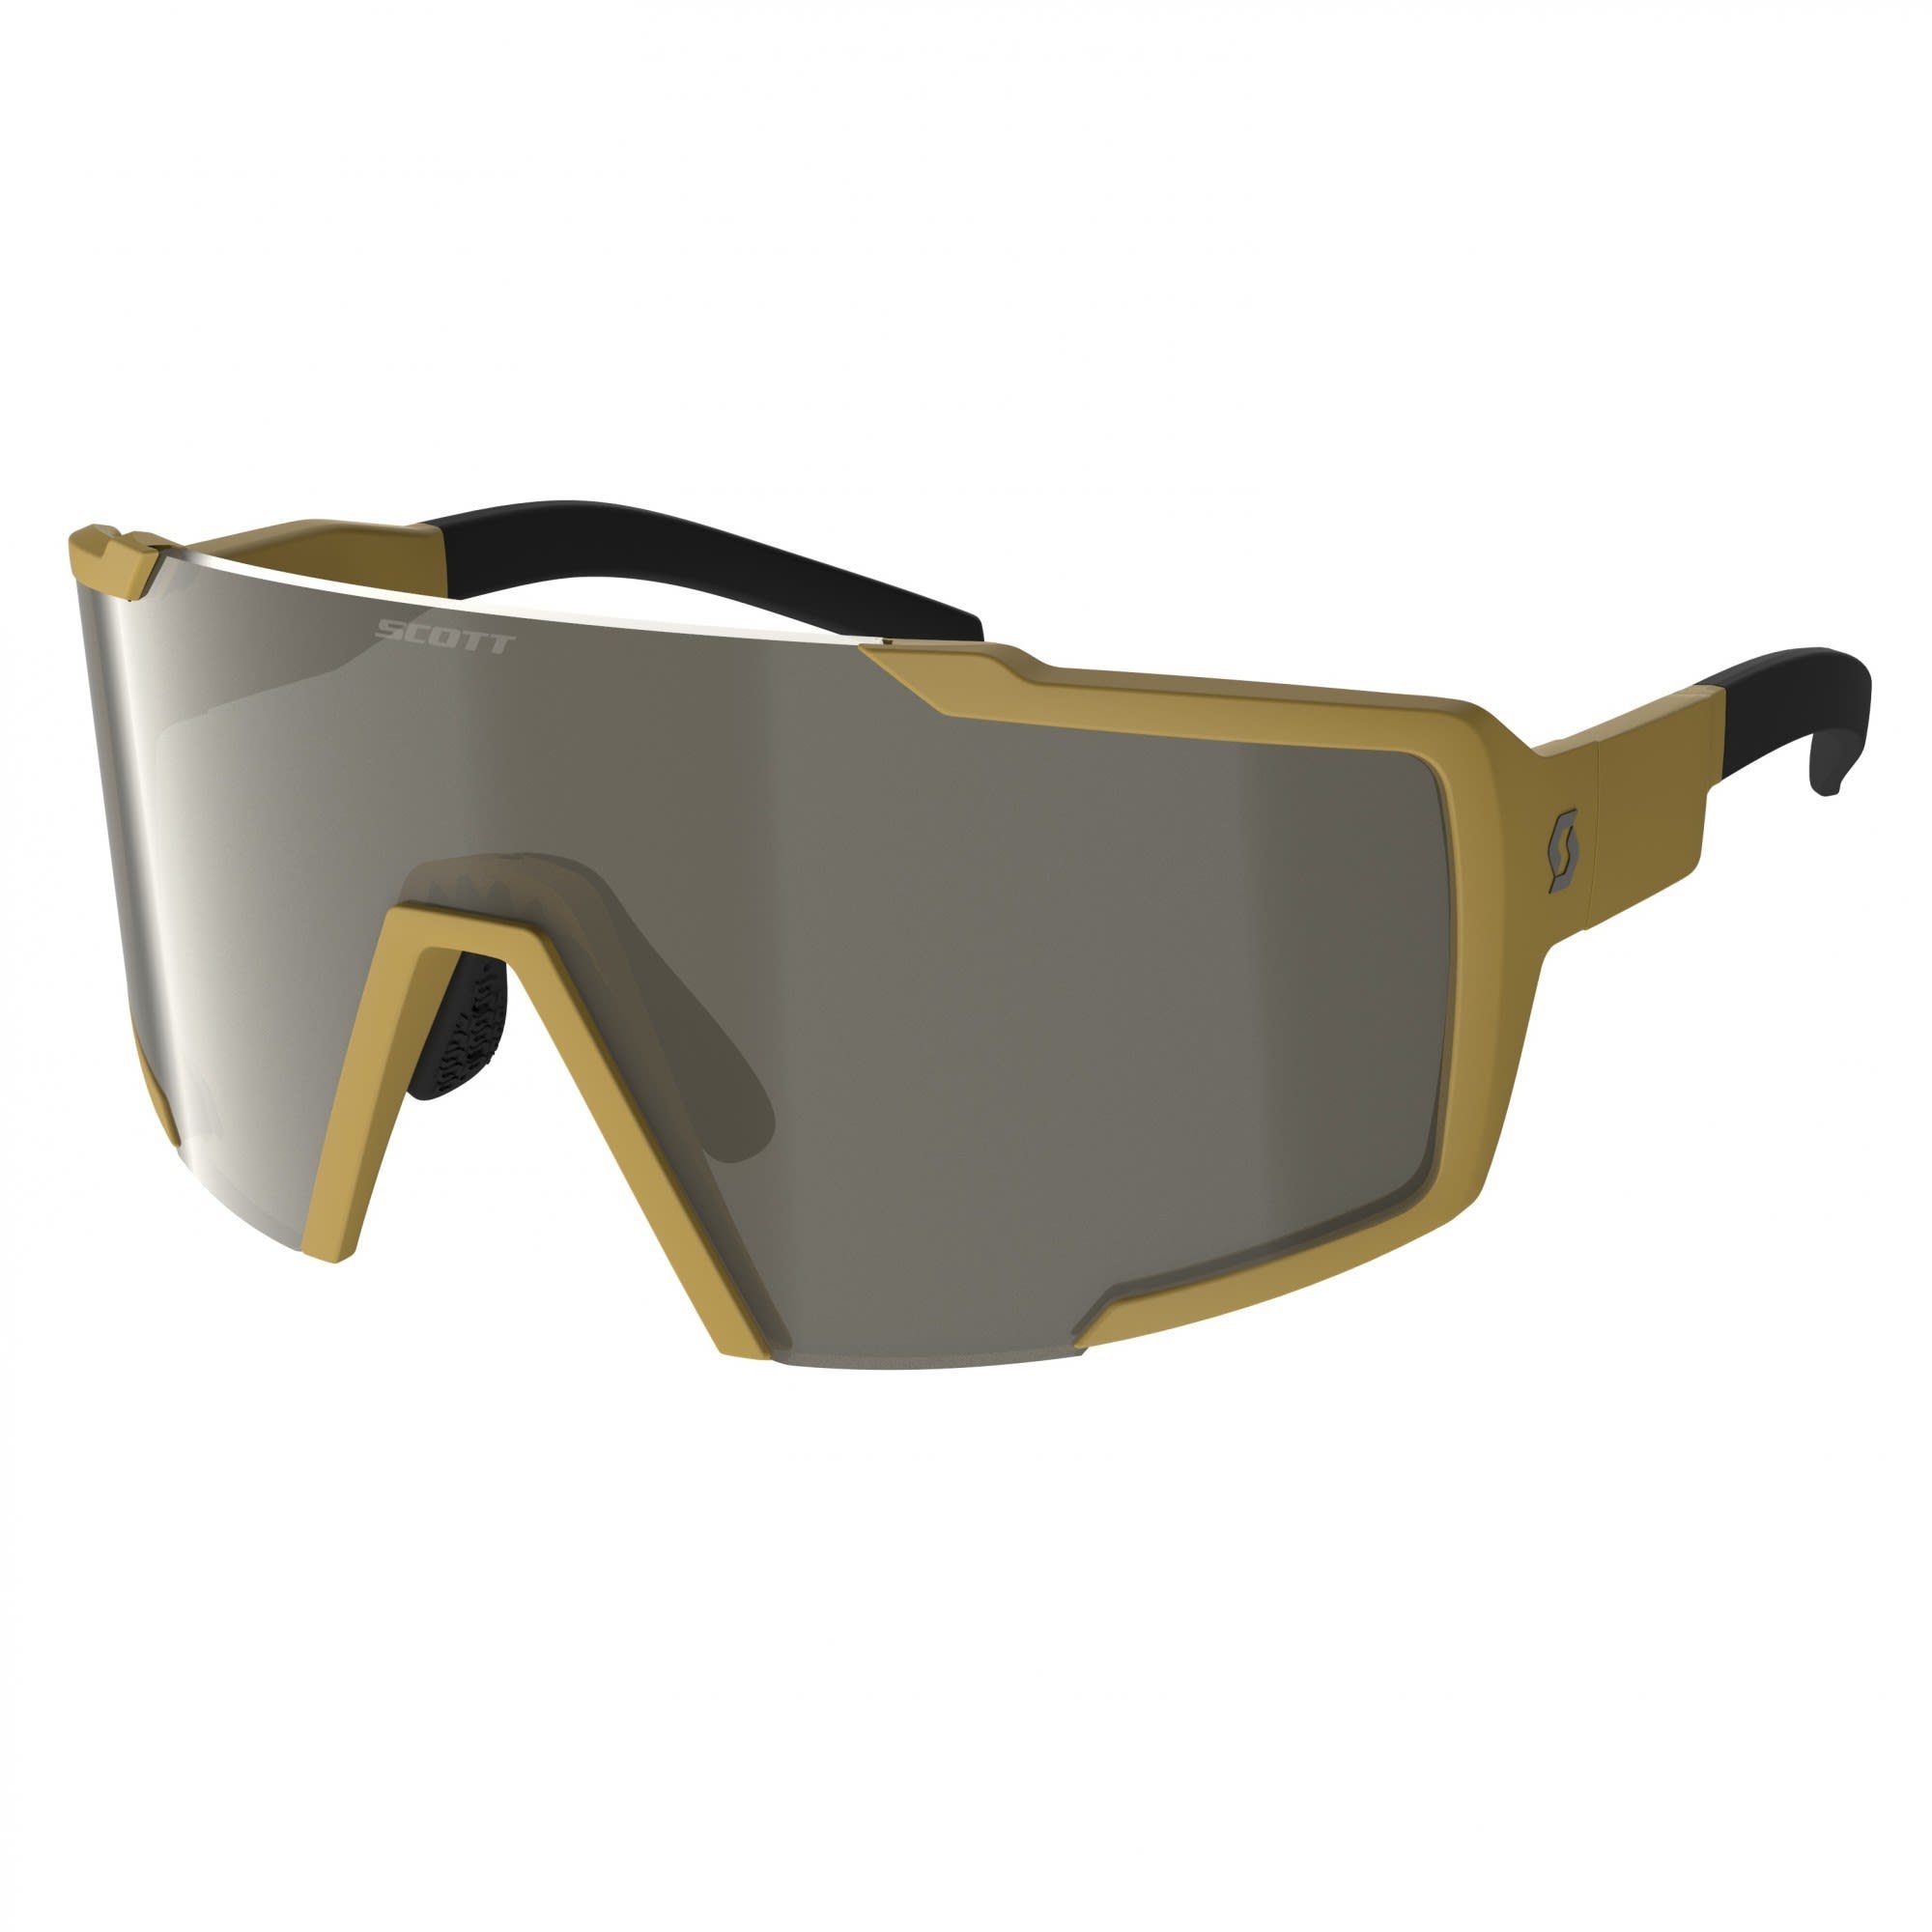 Scott Fahrradbrille Scott Shield Compact Sunglasses Accessoires Gold - Bronze Chrome